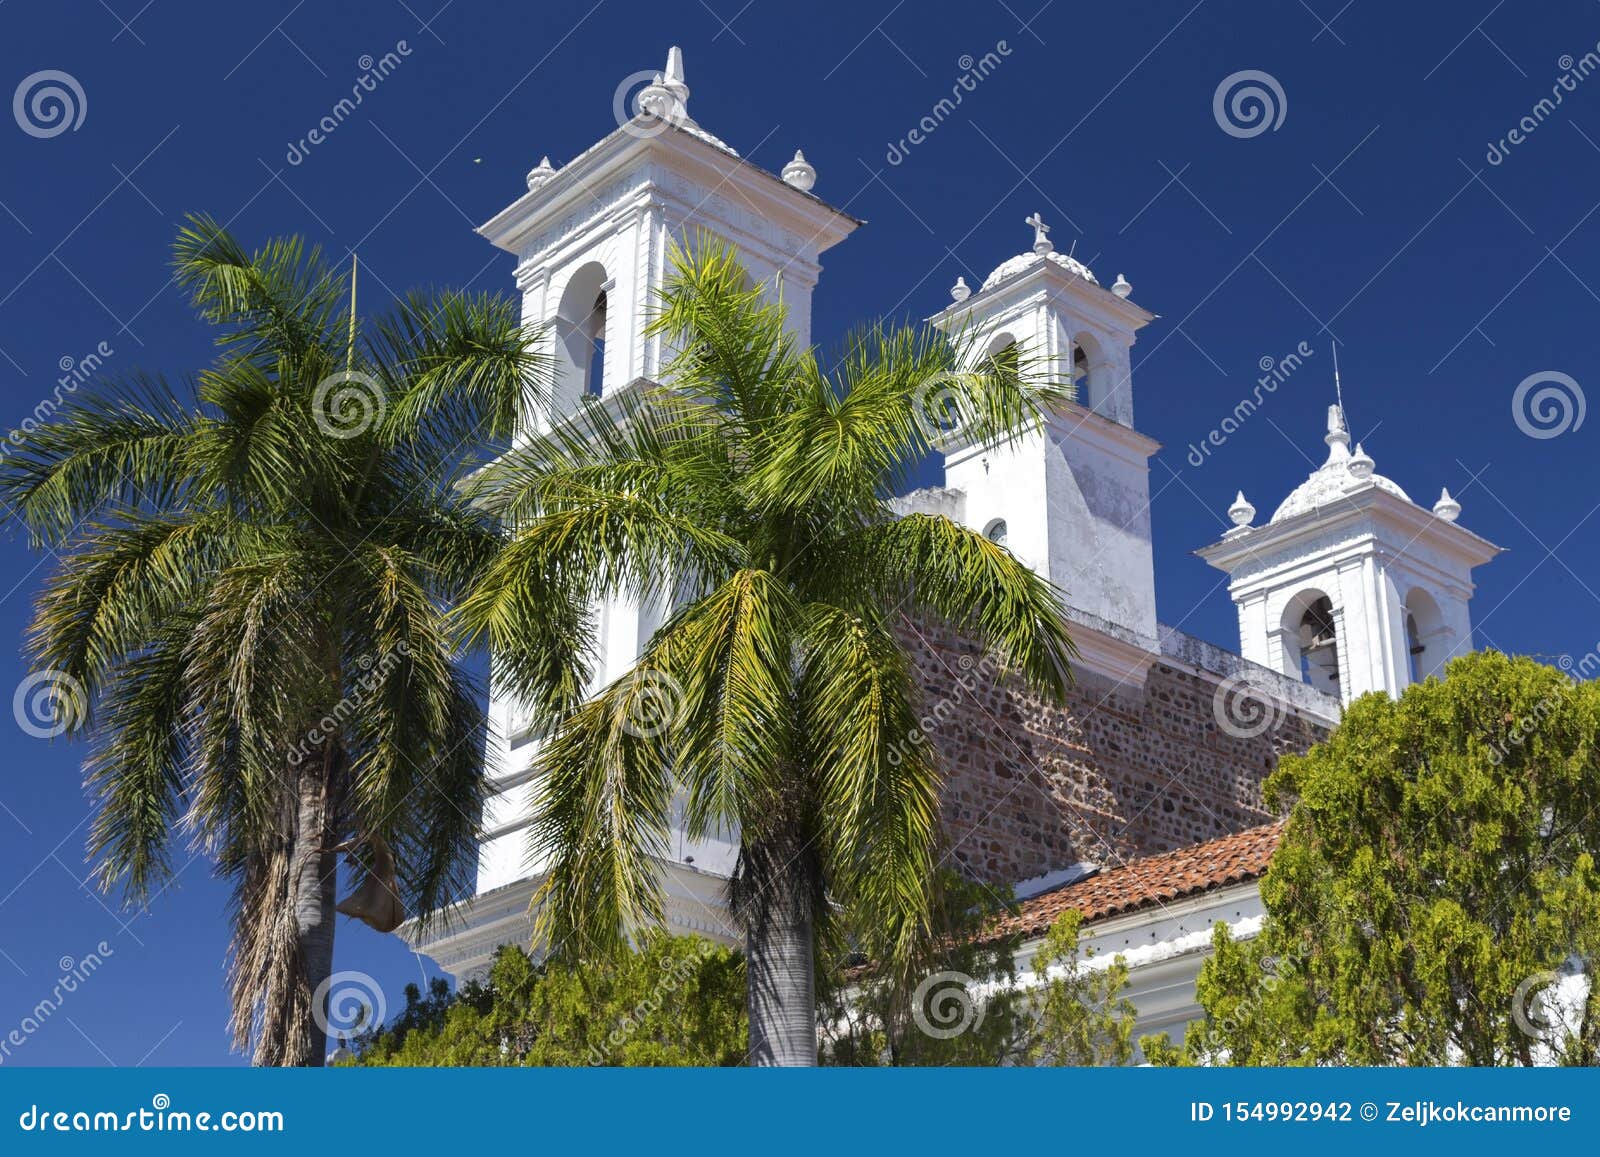 iglesia santa lucia catholic church white tower palm trees suchitoto el salvador